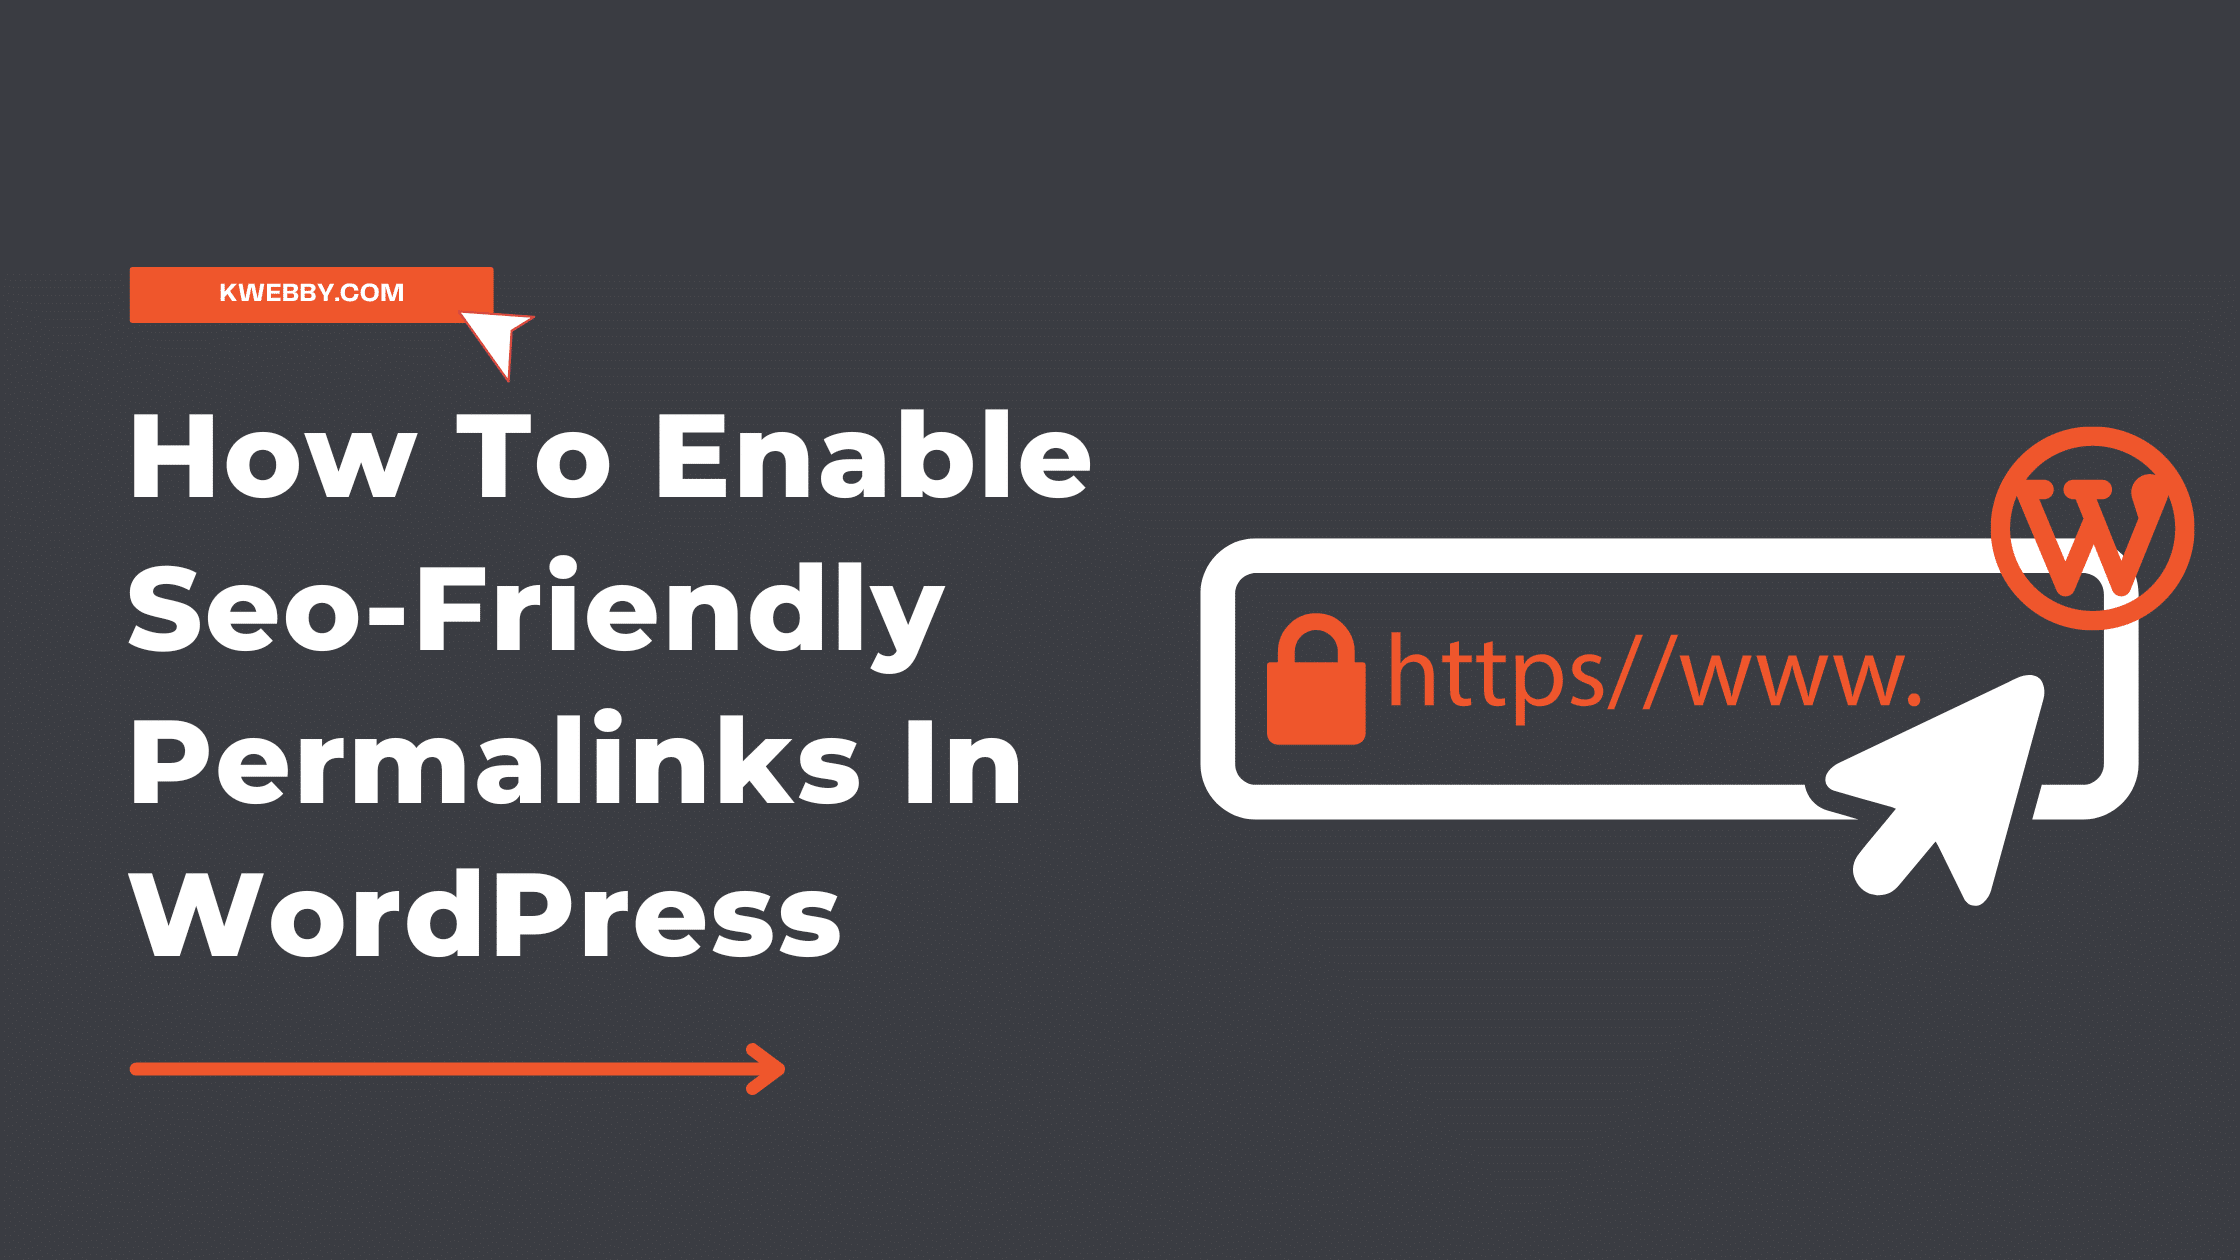 How To Enable Seo-Friendly Permalinks In WordPress